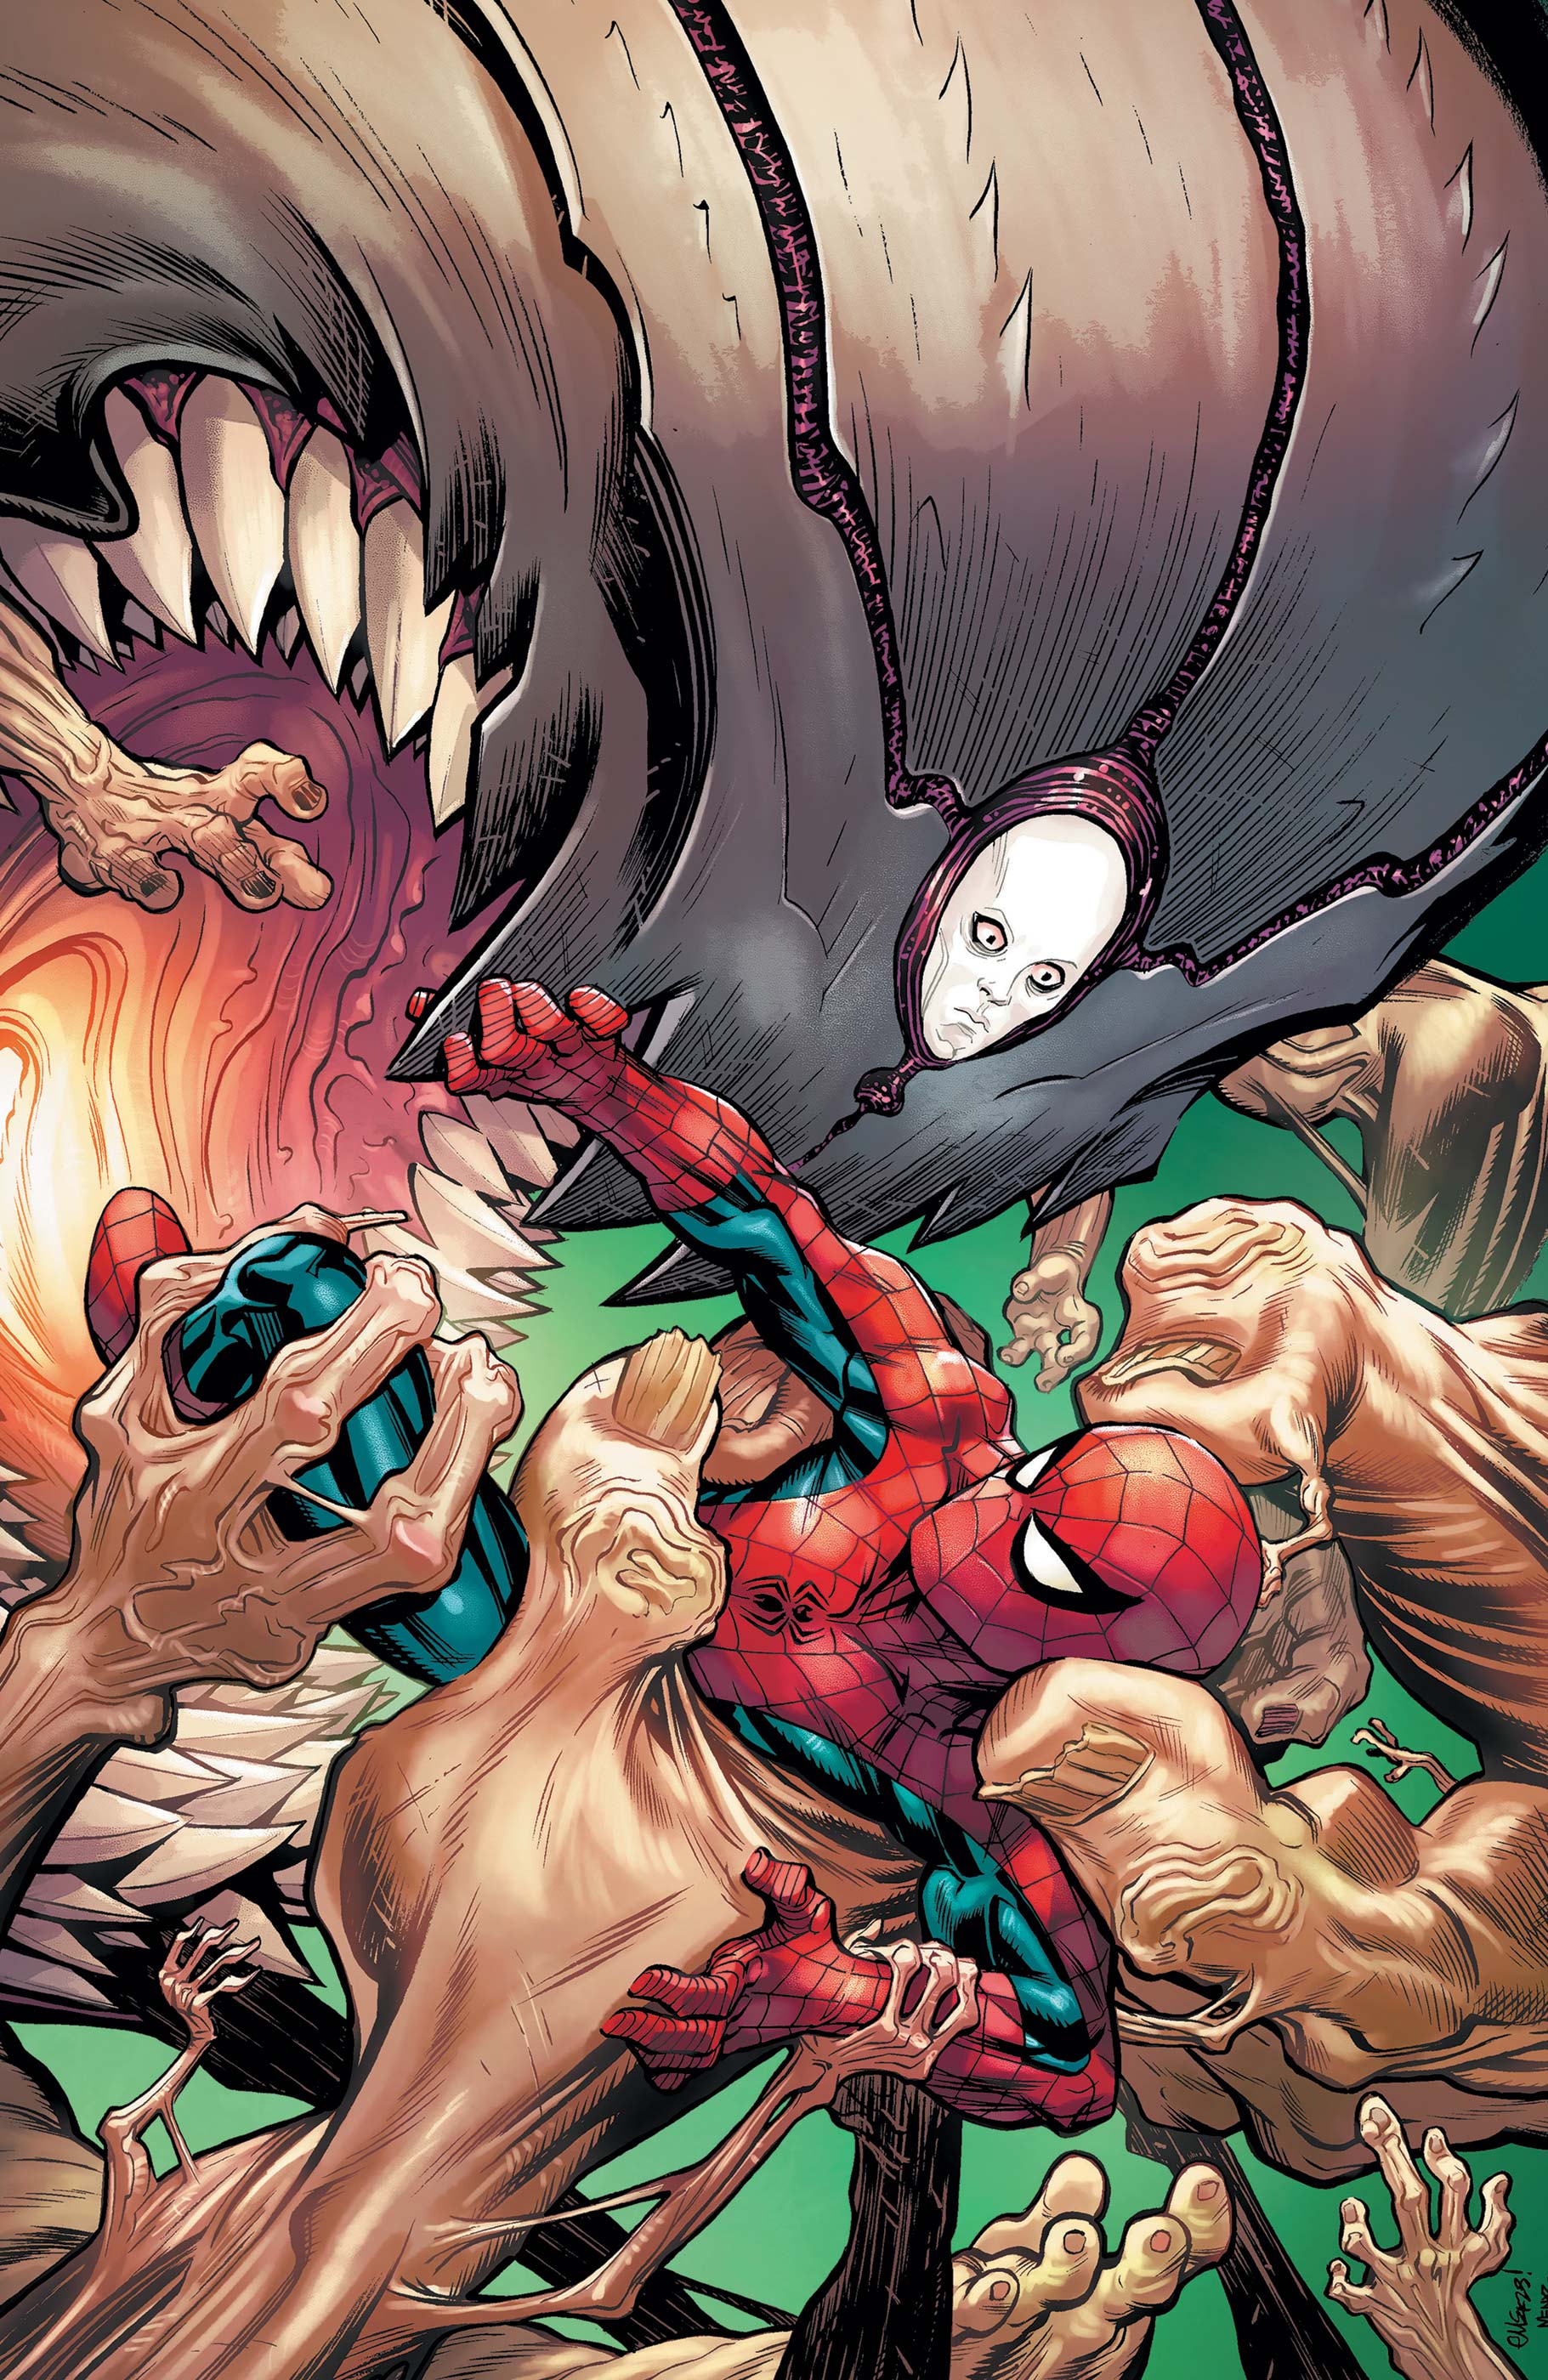 The Amazing Spider-Man (2022) #38 (Variant)